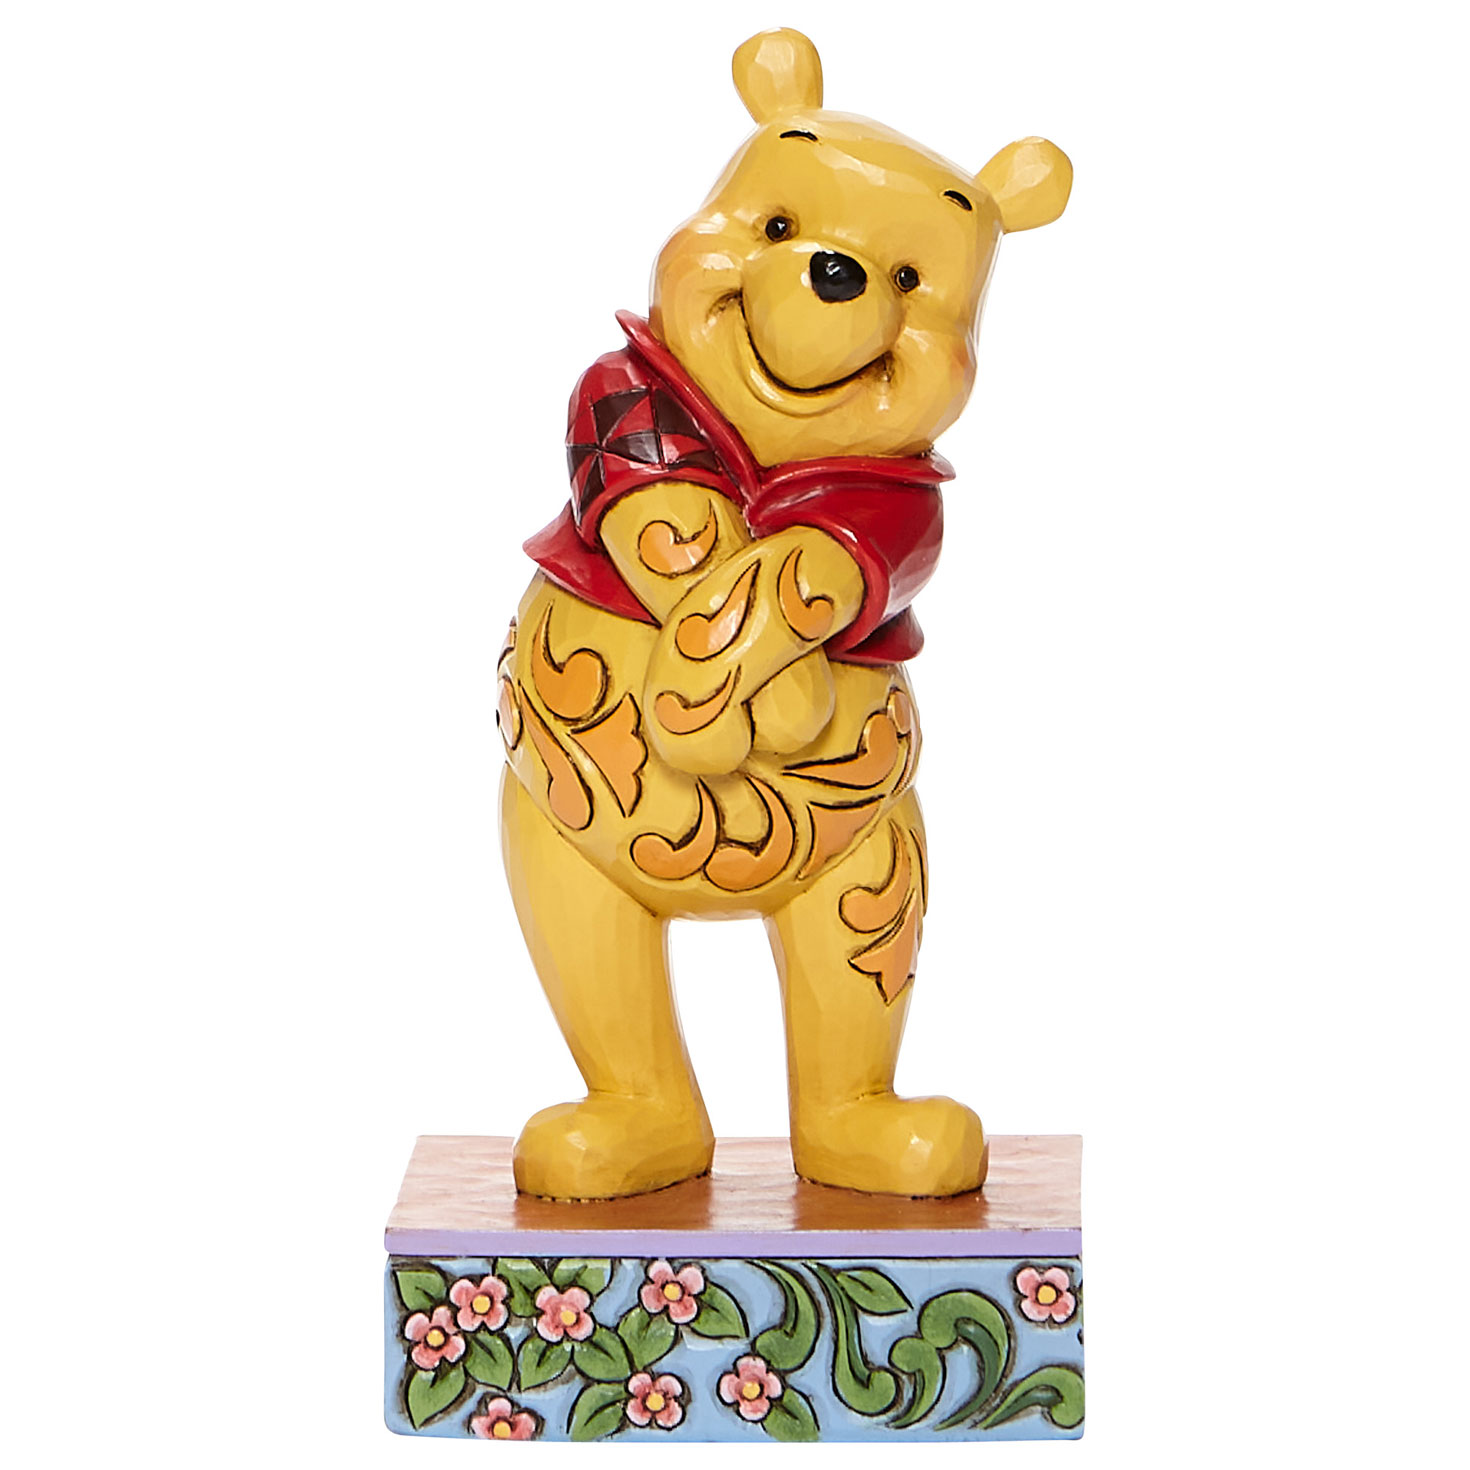 Jim Shore Disney Winnie the Pooh Standing Figurine, 4.75 - Figurines